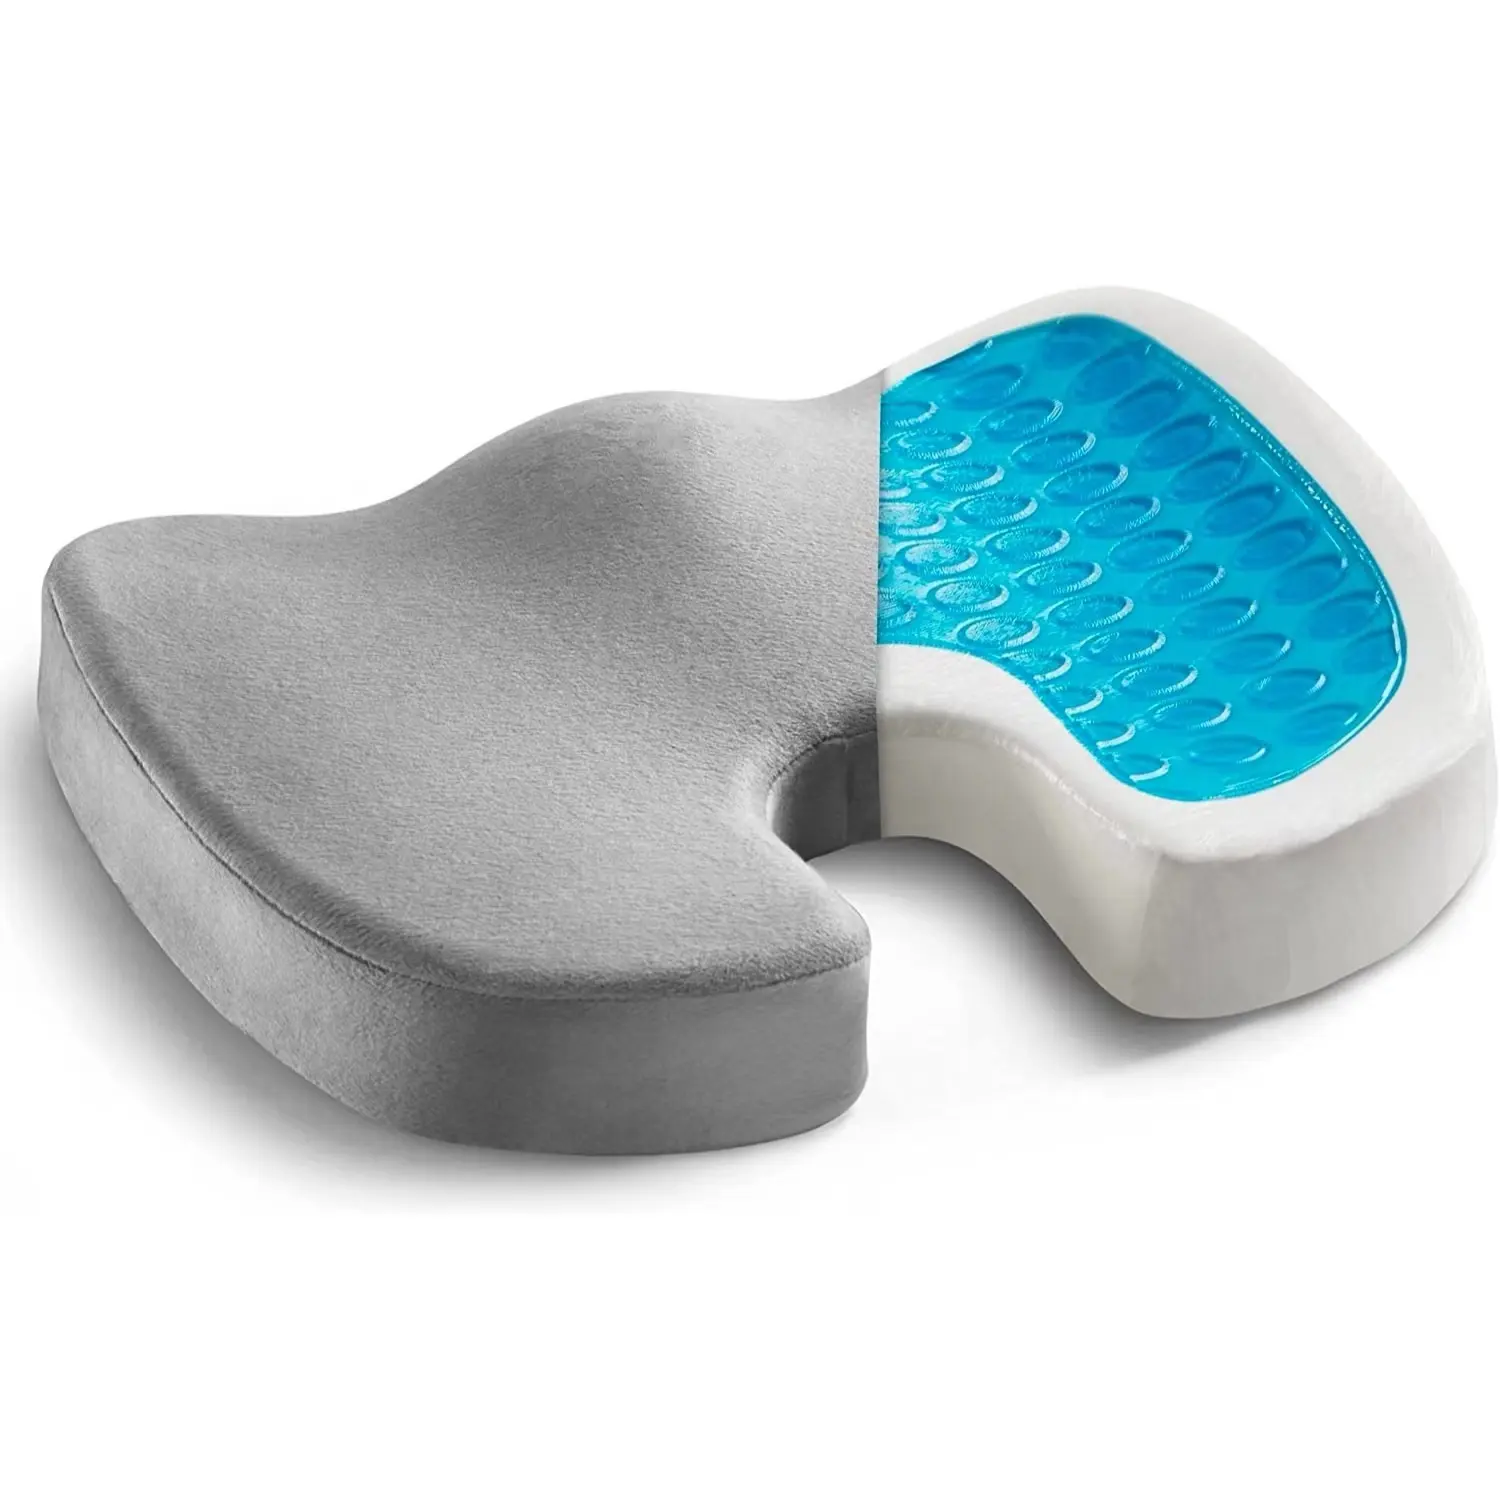 Wholesale Memory Foam Gel Seat Cushion,Orthopedic Seat Cushion Memory Foam Gel Sitting Pillow For Back Pain